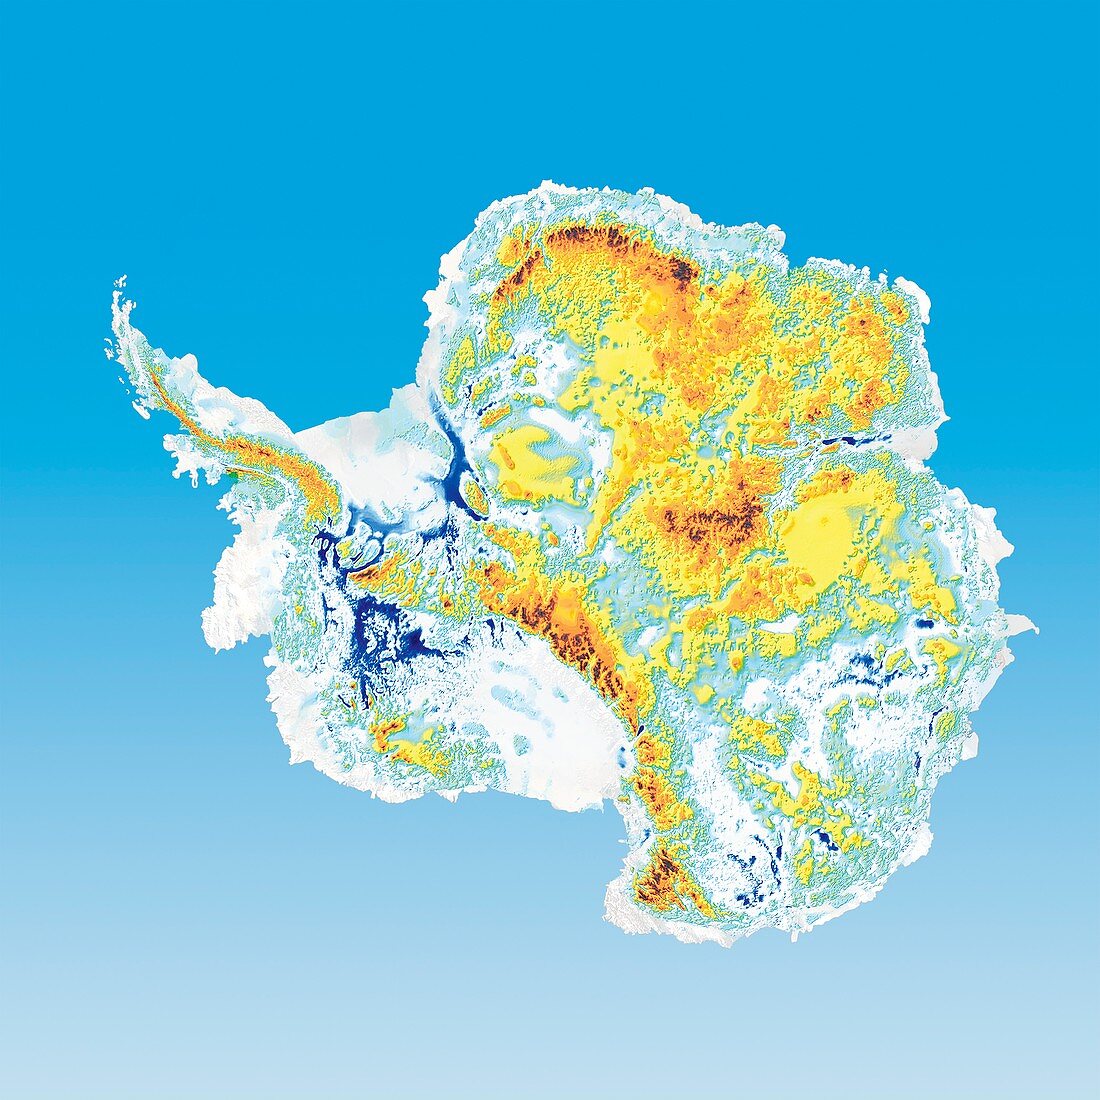 Antarctic bedrock,elevation map